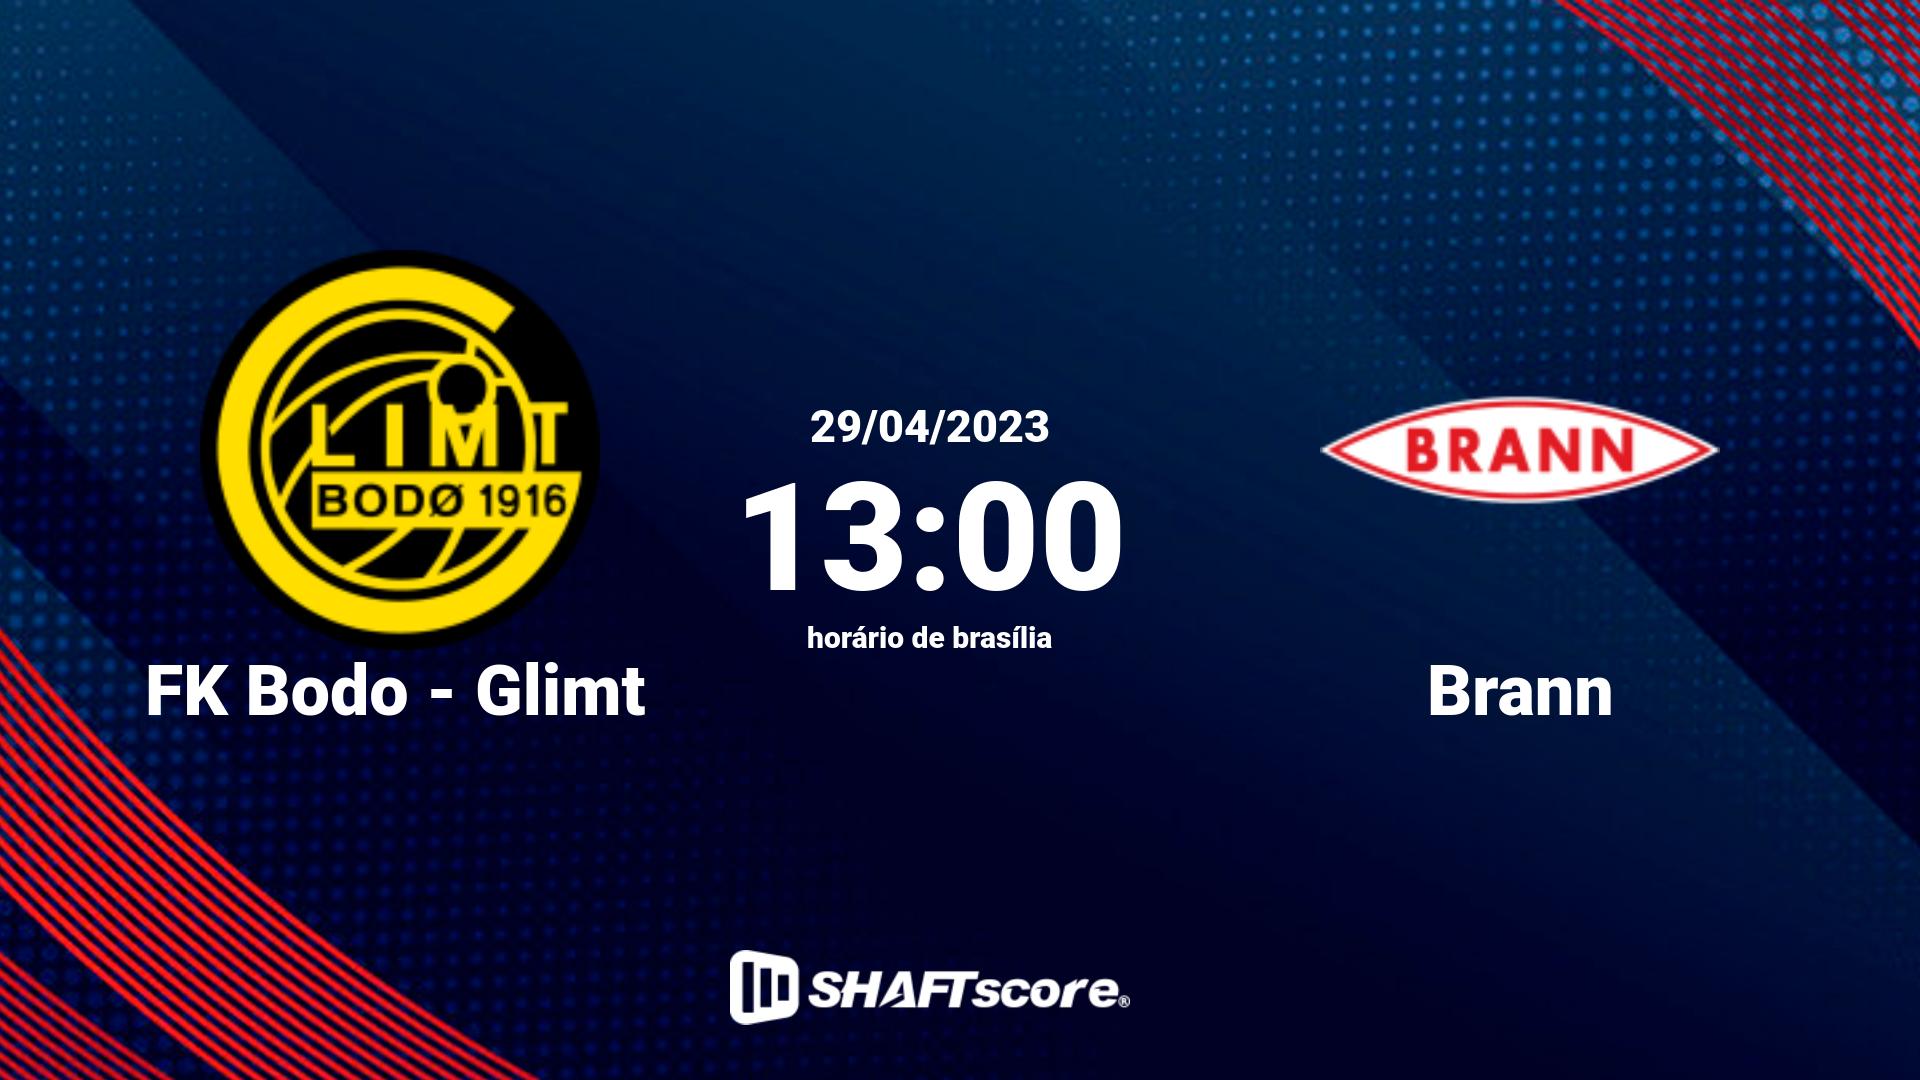 Estatísticas do jogo FK Bodo - Glimt vs Brann 29.04 13:00